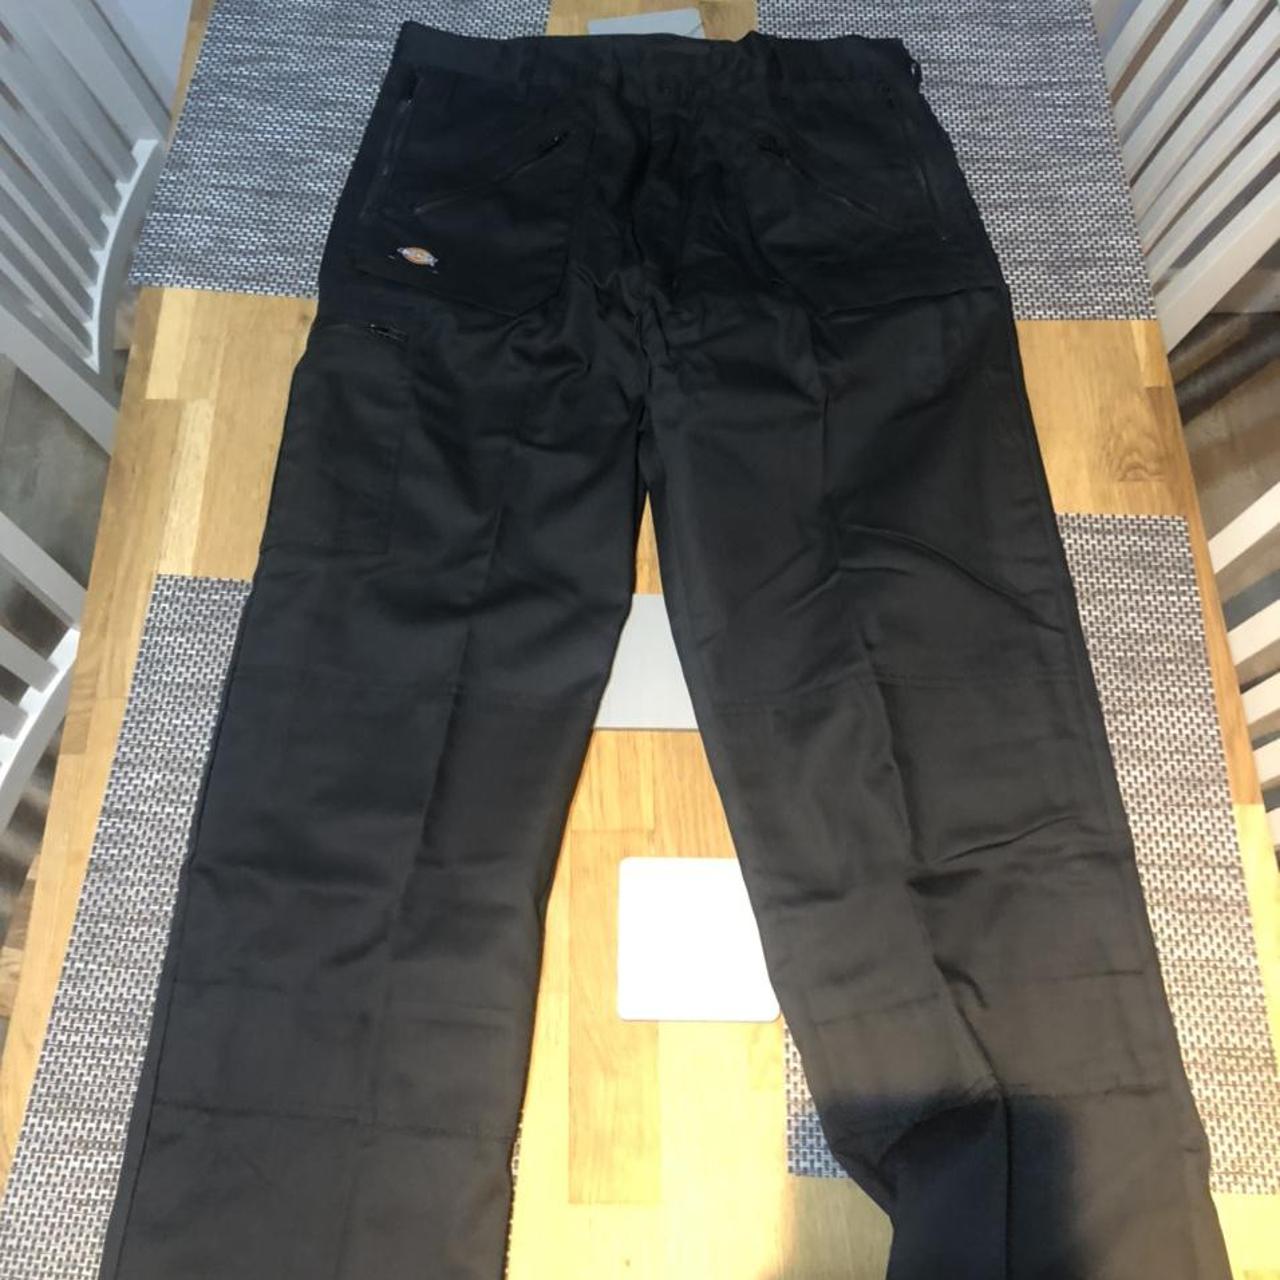 Product Image 2 - Dickies black work/ cargo pants/